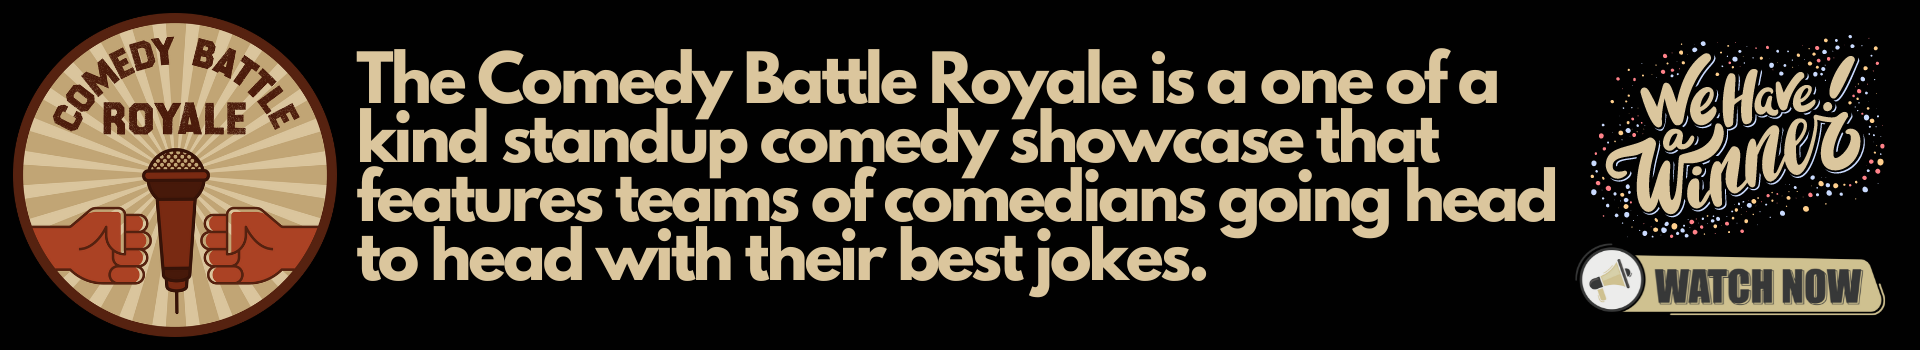 Comedy Battle Royale Banner 350